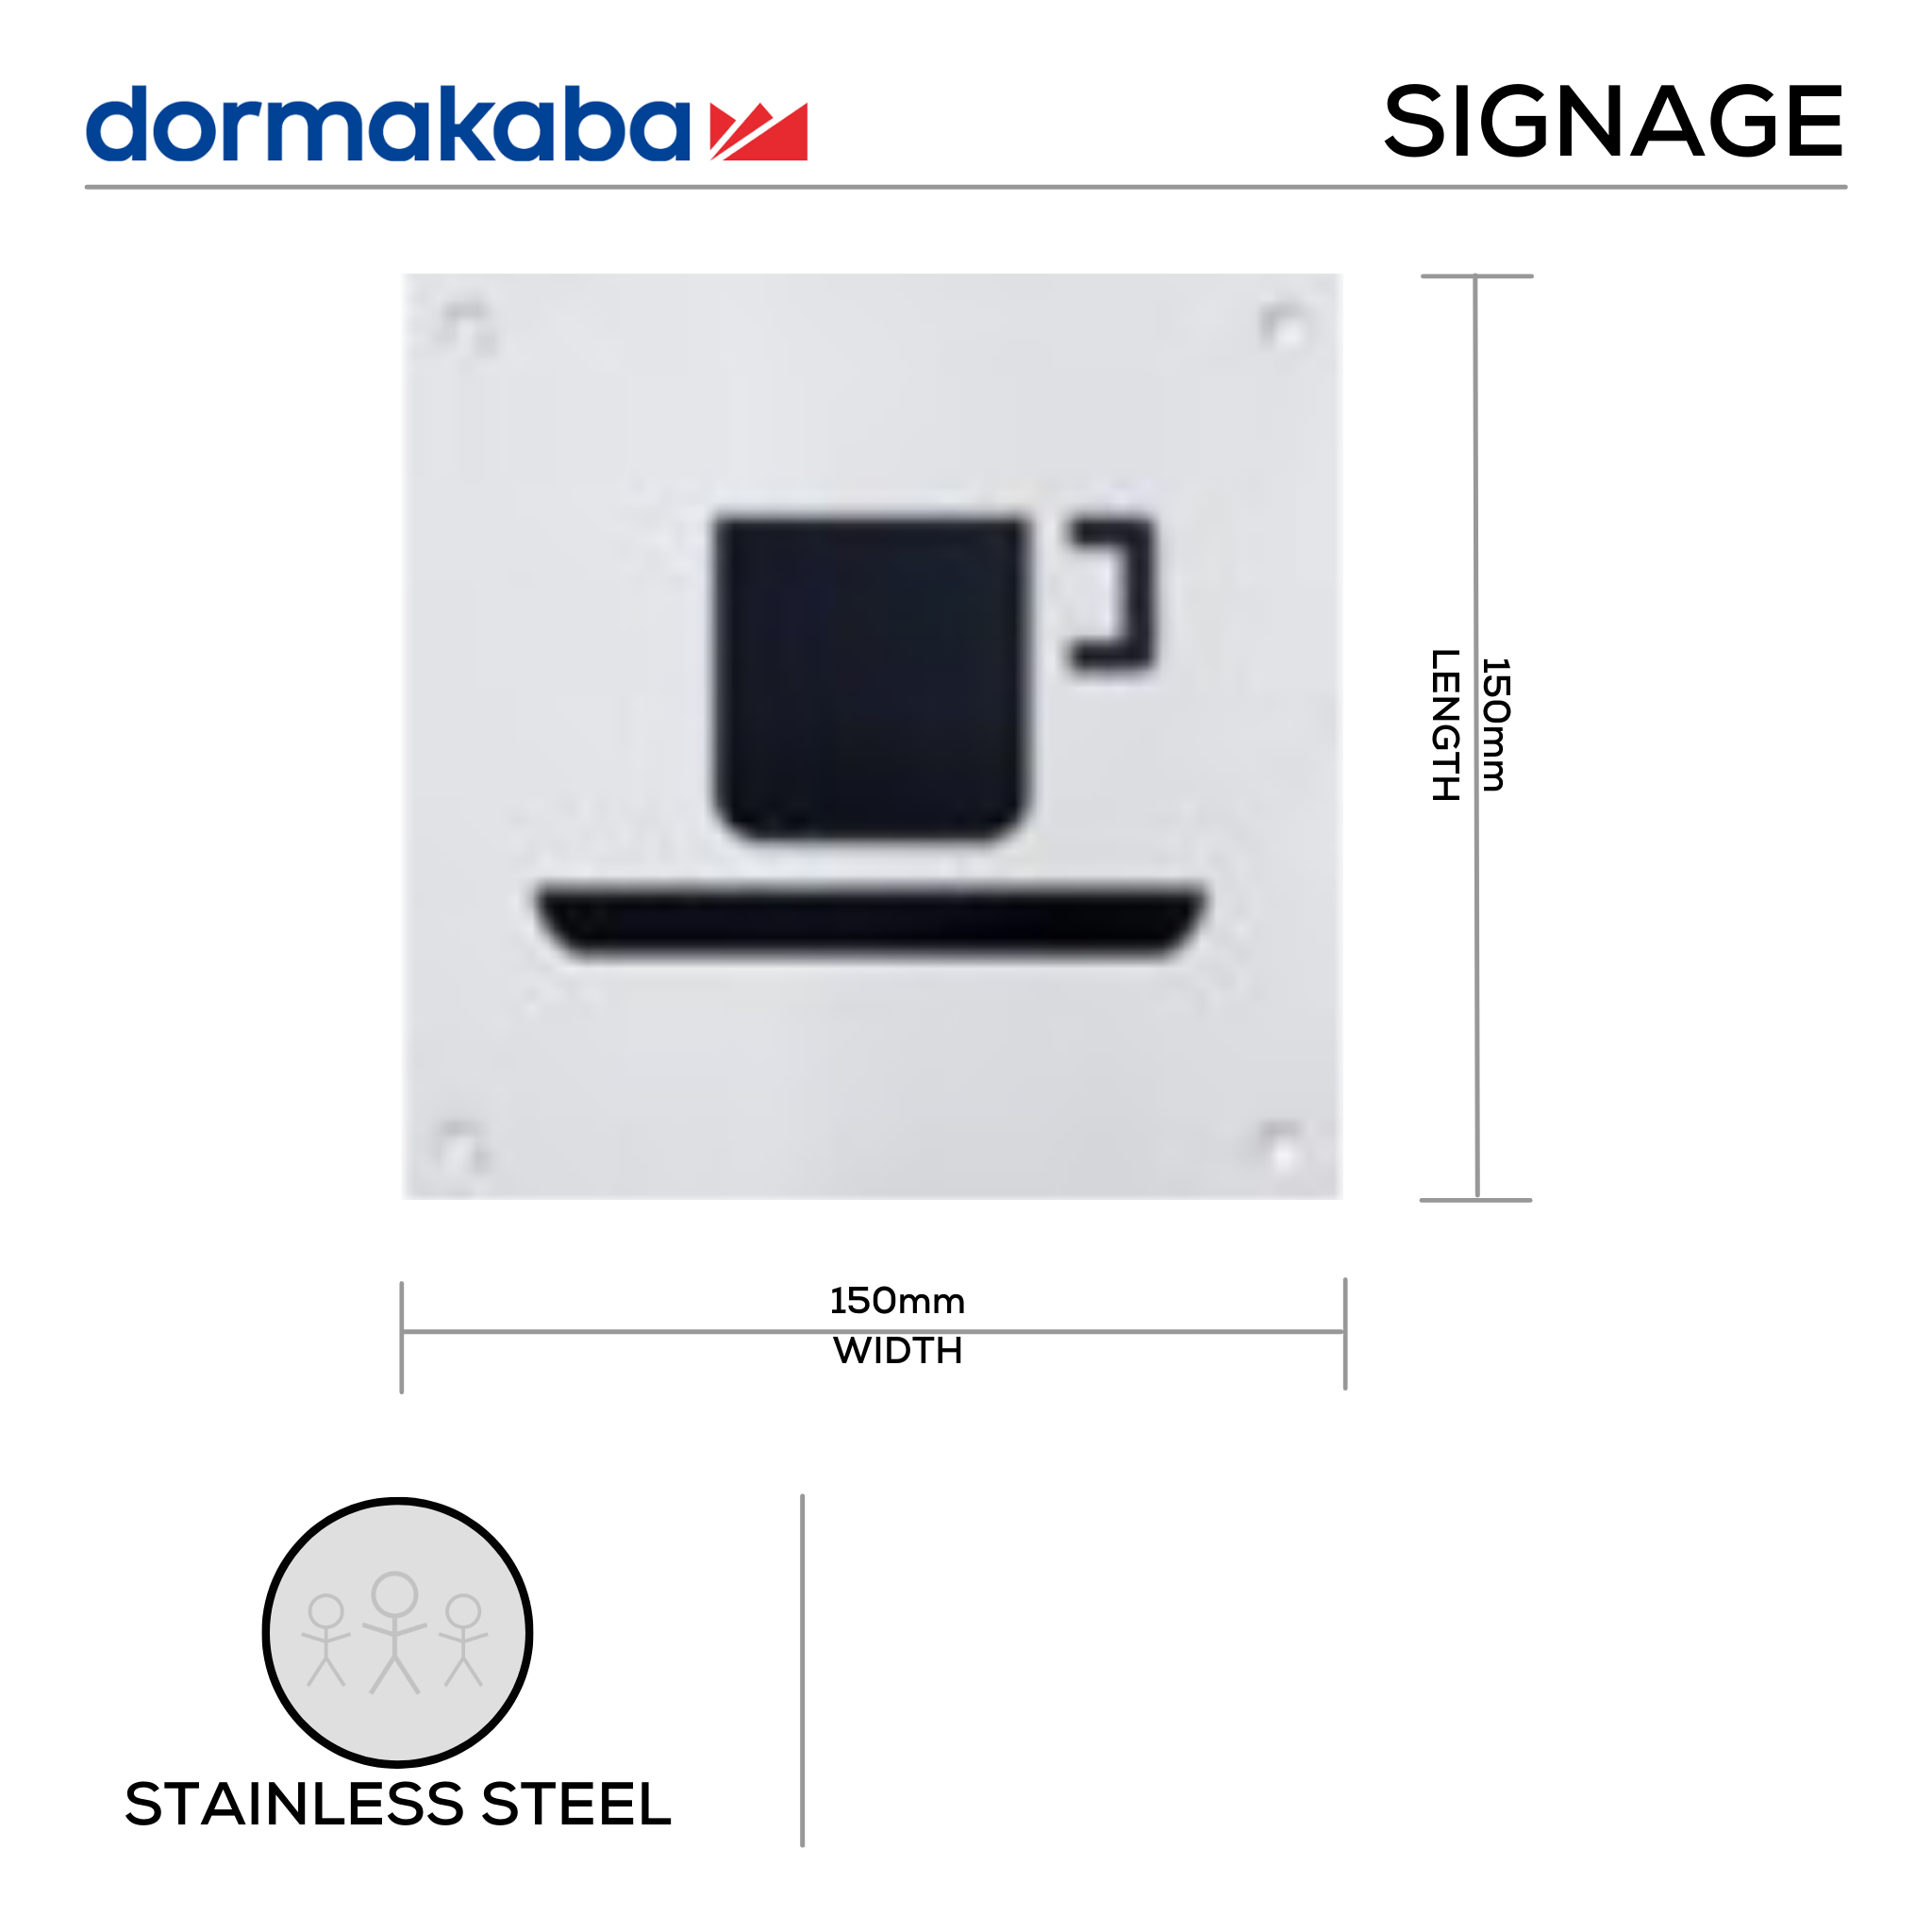 DSS-135, Door Signage, Tea Cup , 150mm (l), 150mm (w), 1,2mm (t), Stainless Steel, DORMAKABA